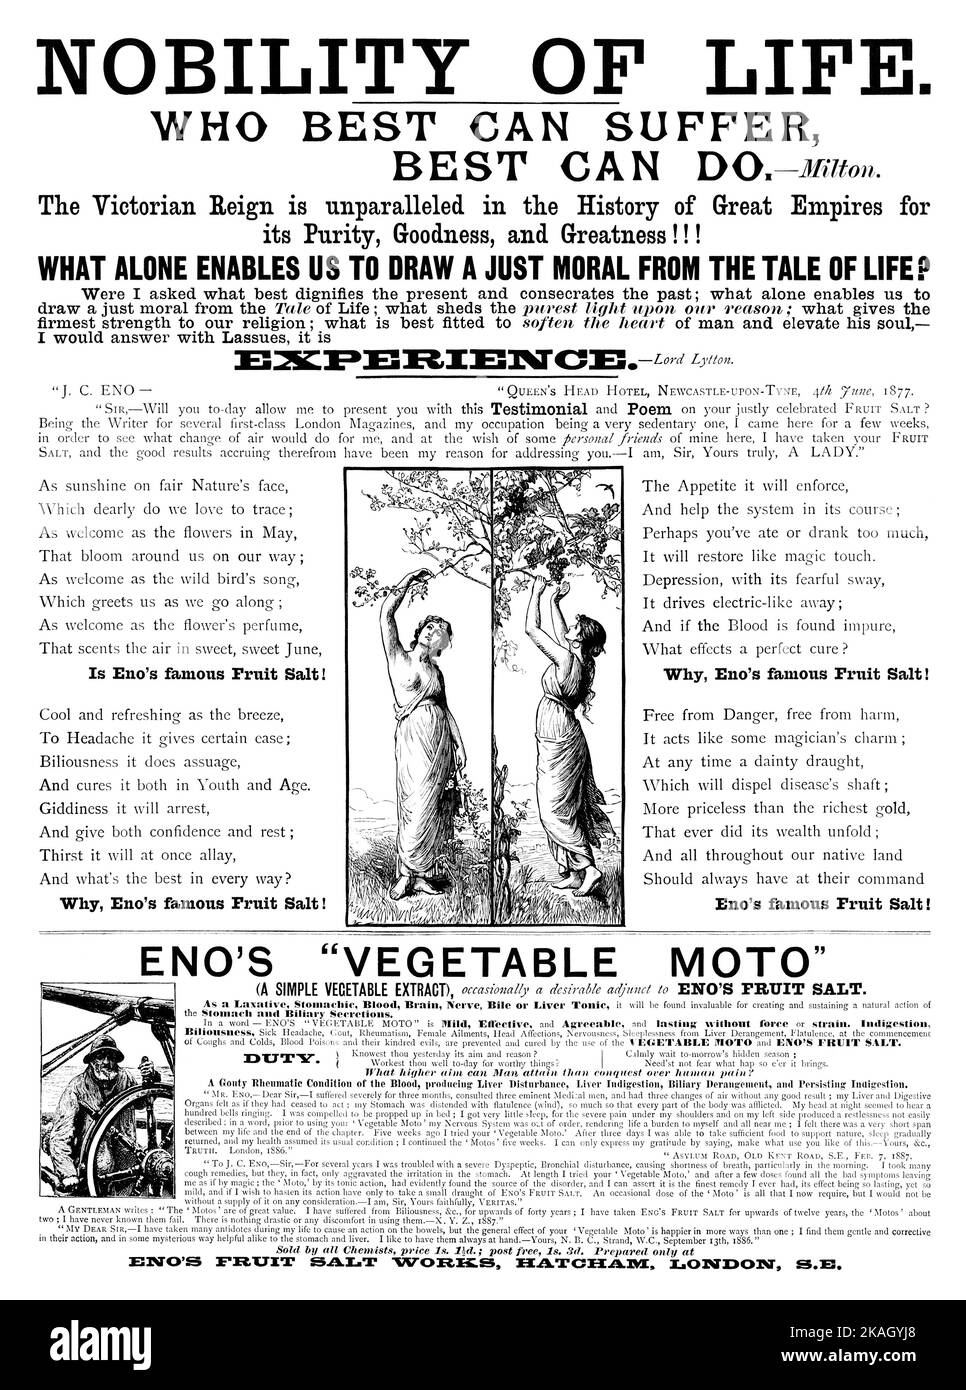 1887 British advertisement for Eno's Fruit Salt. Stock Photo